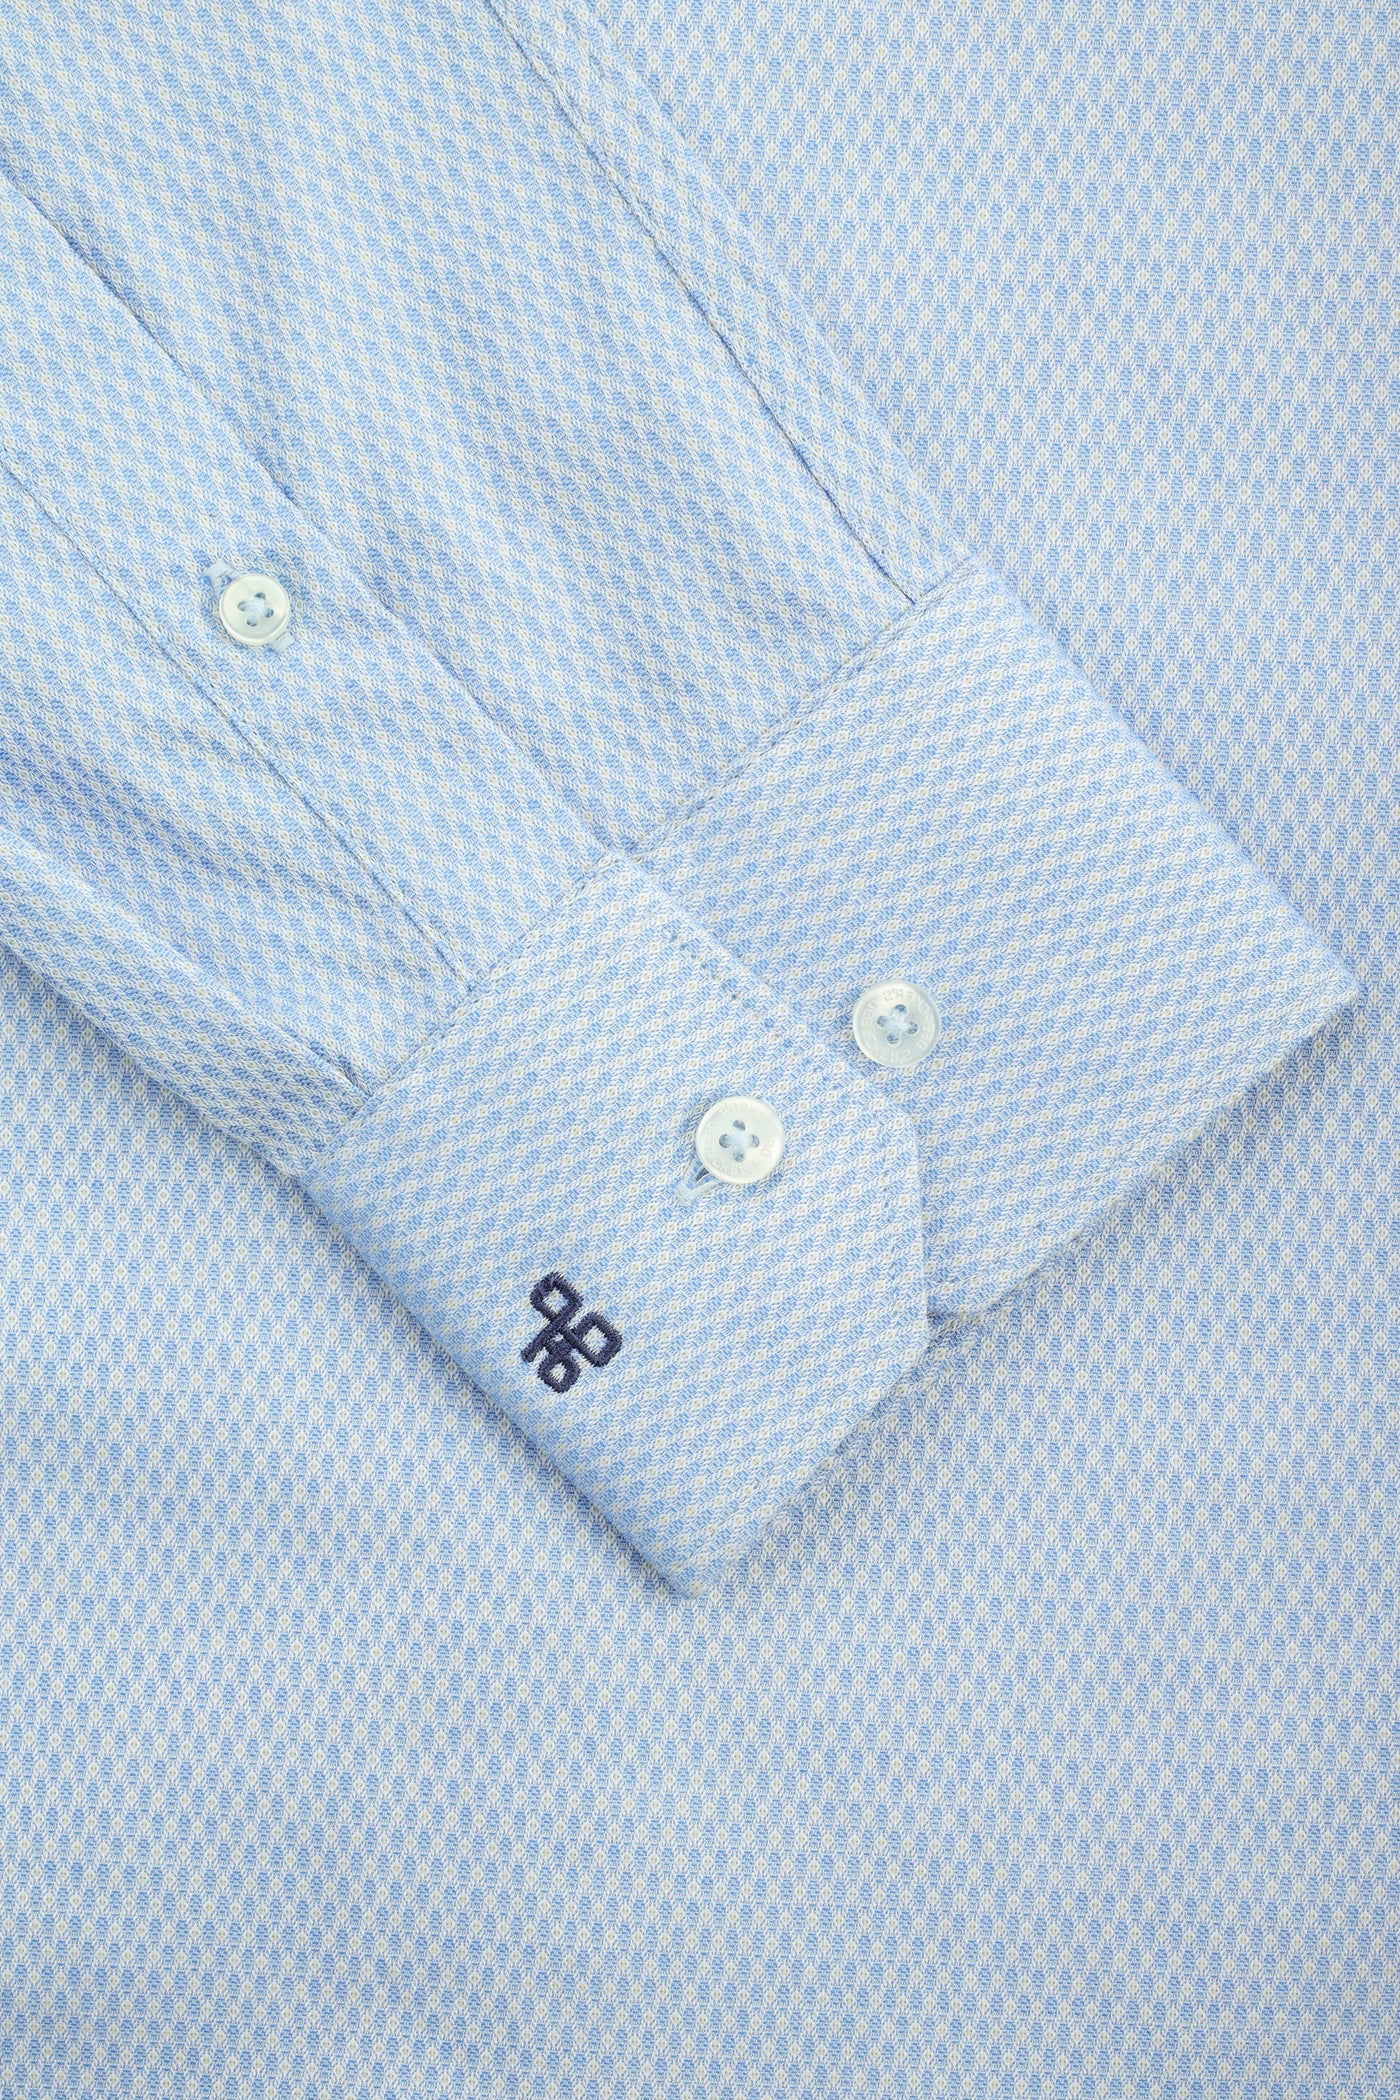 Patterned Light Blue &White Cotton Simi Classic Shirt